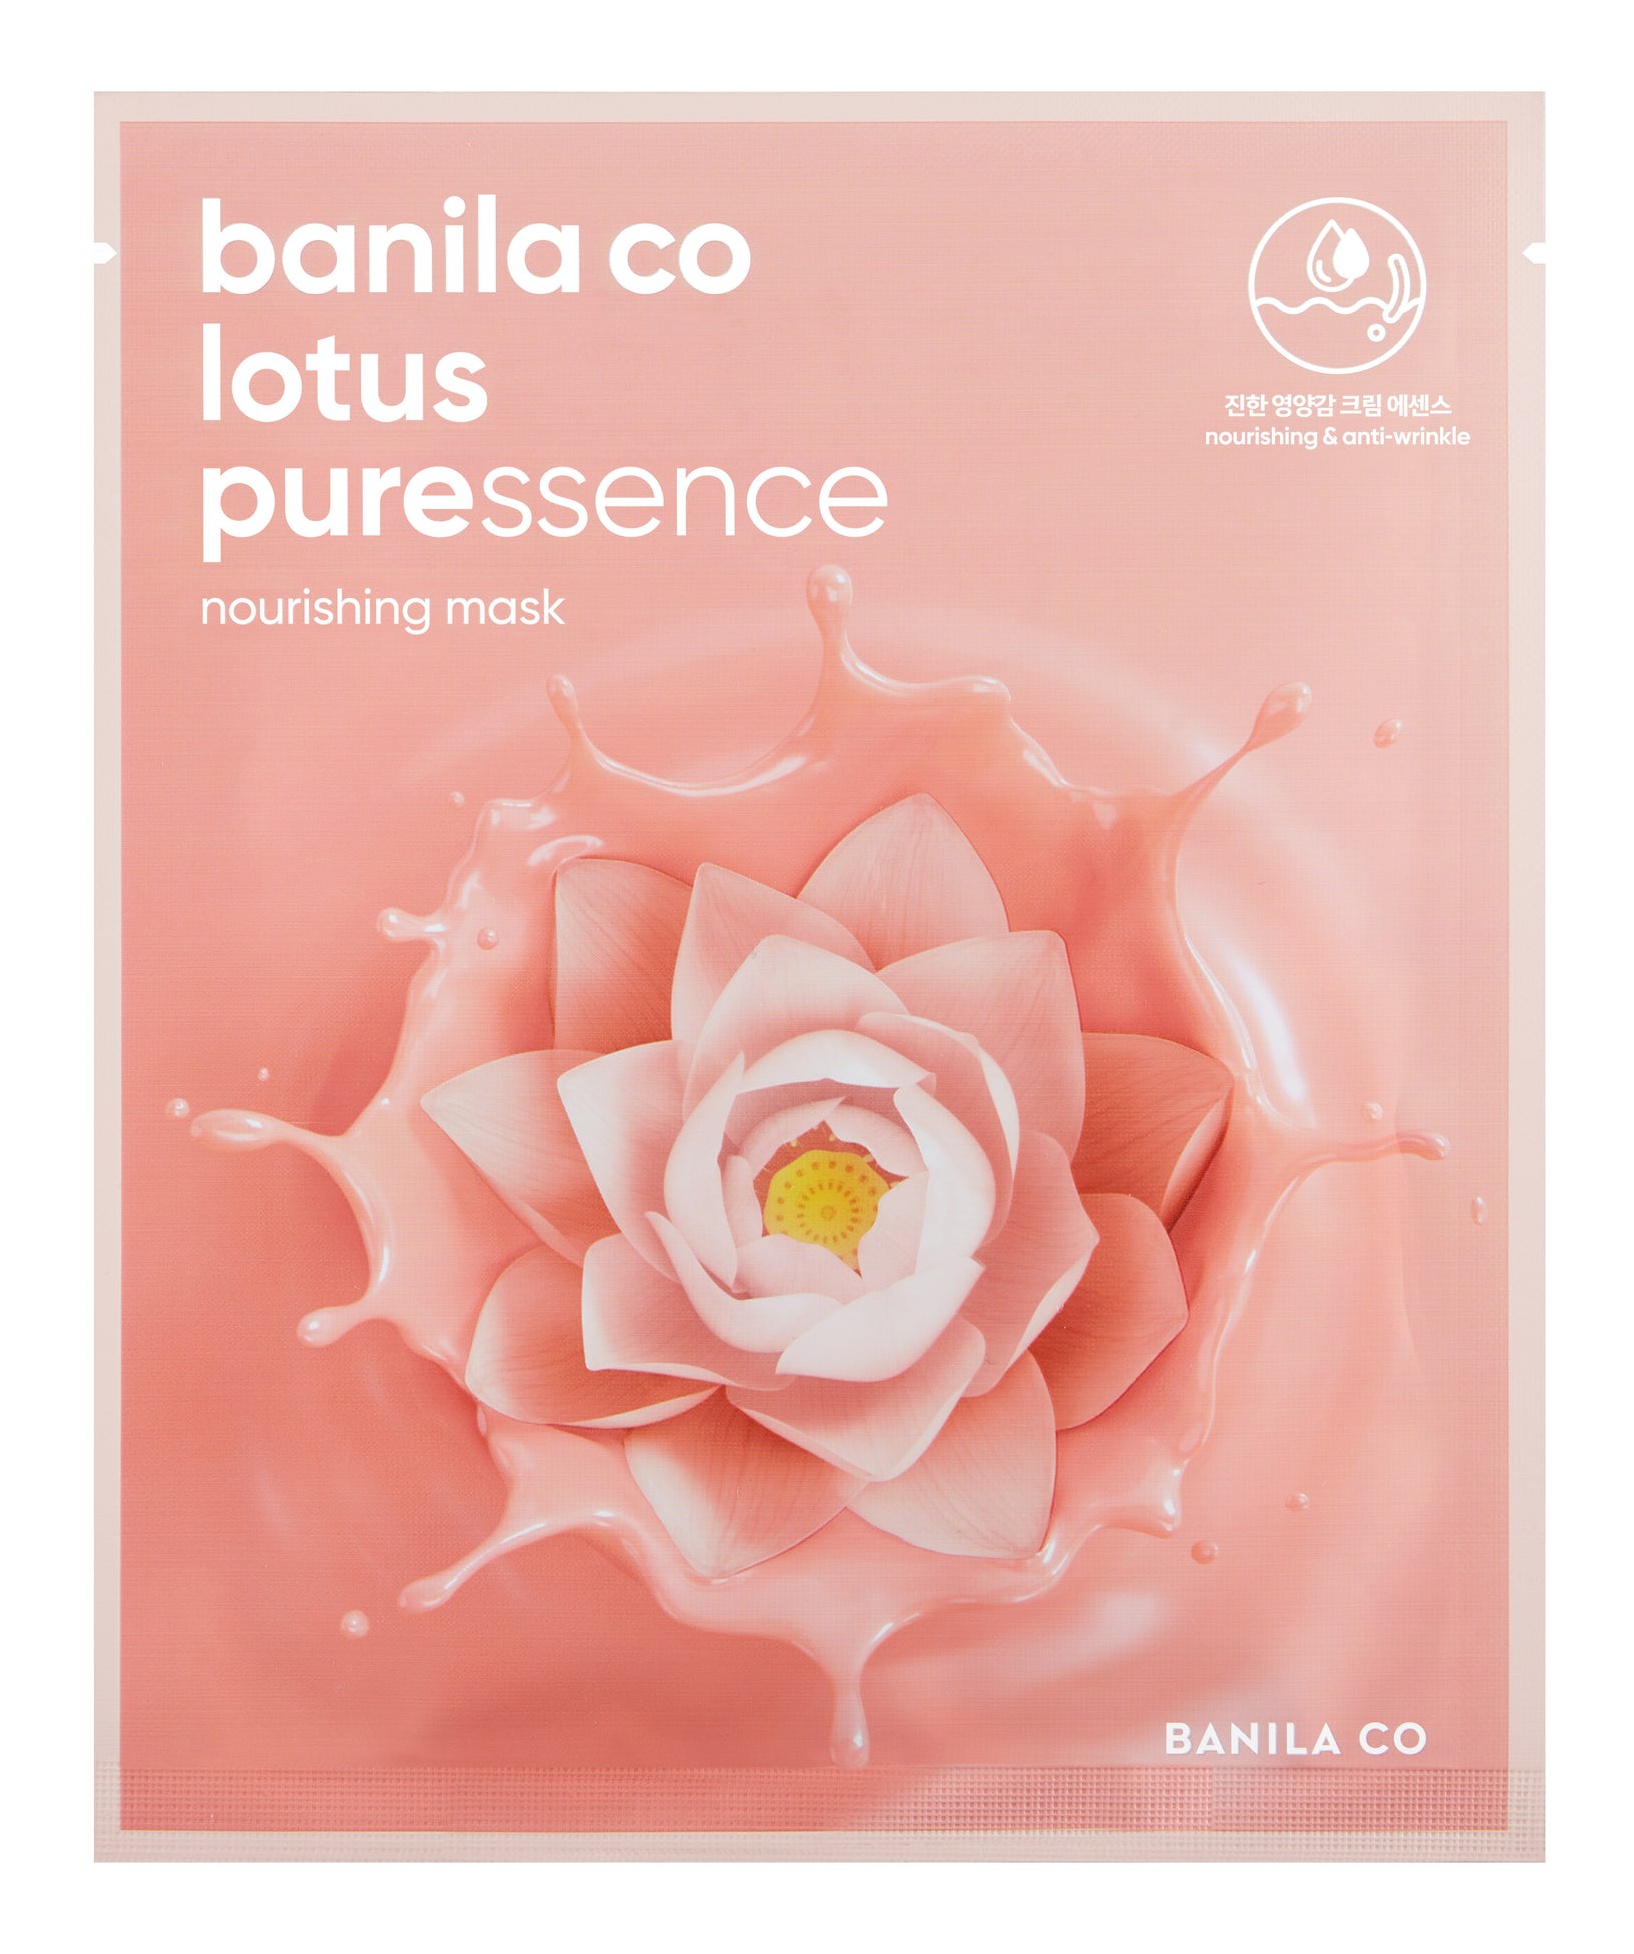 Banila Co Lotus Puressence Nourishing Mask